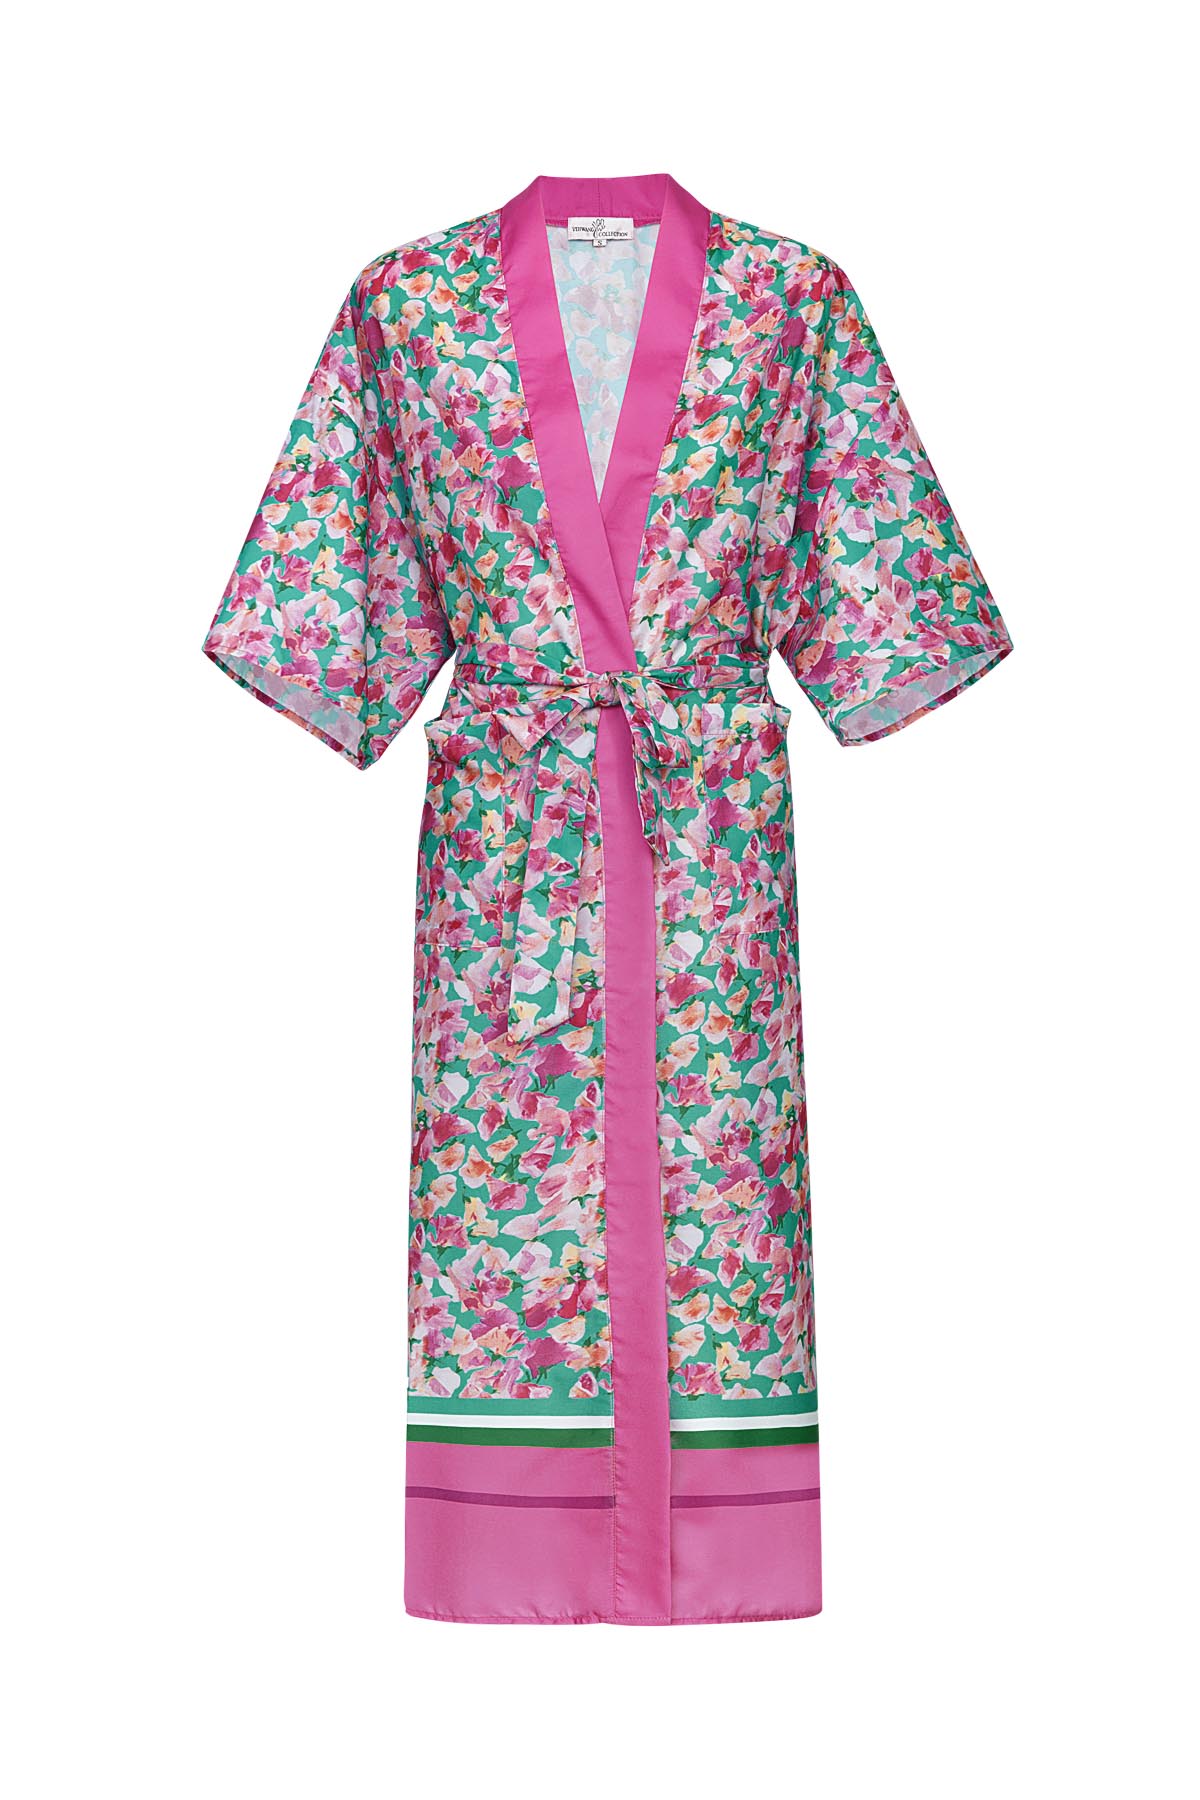 Kimono flower power - pink 